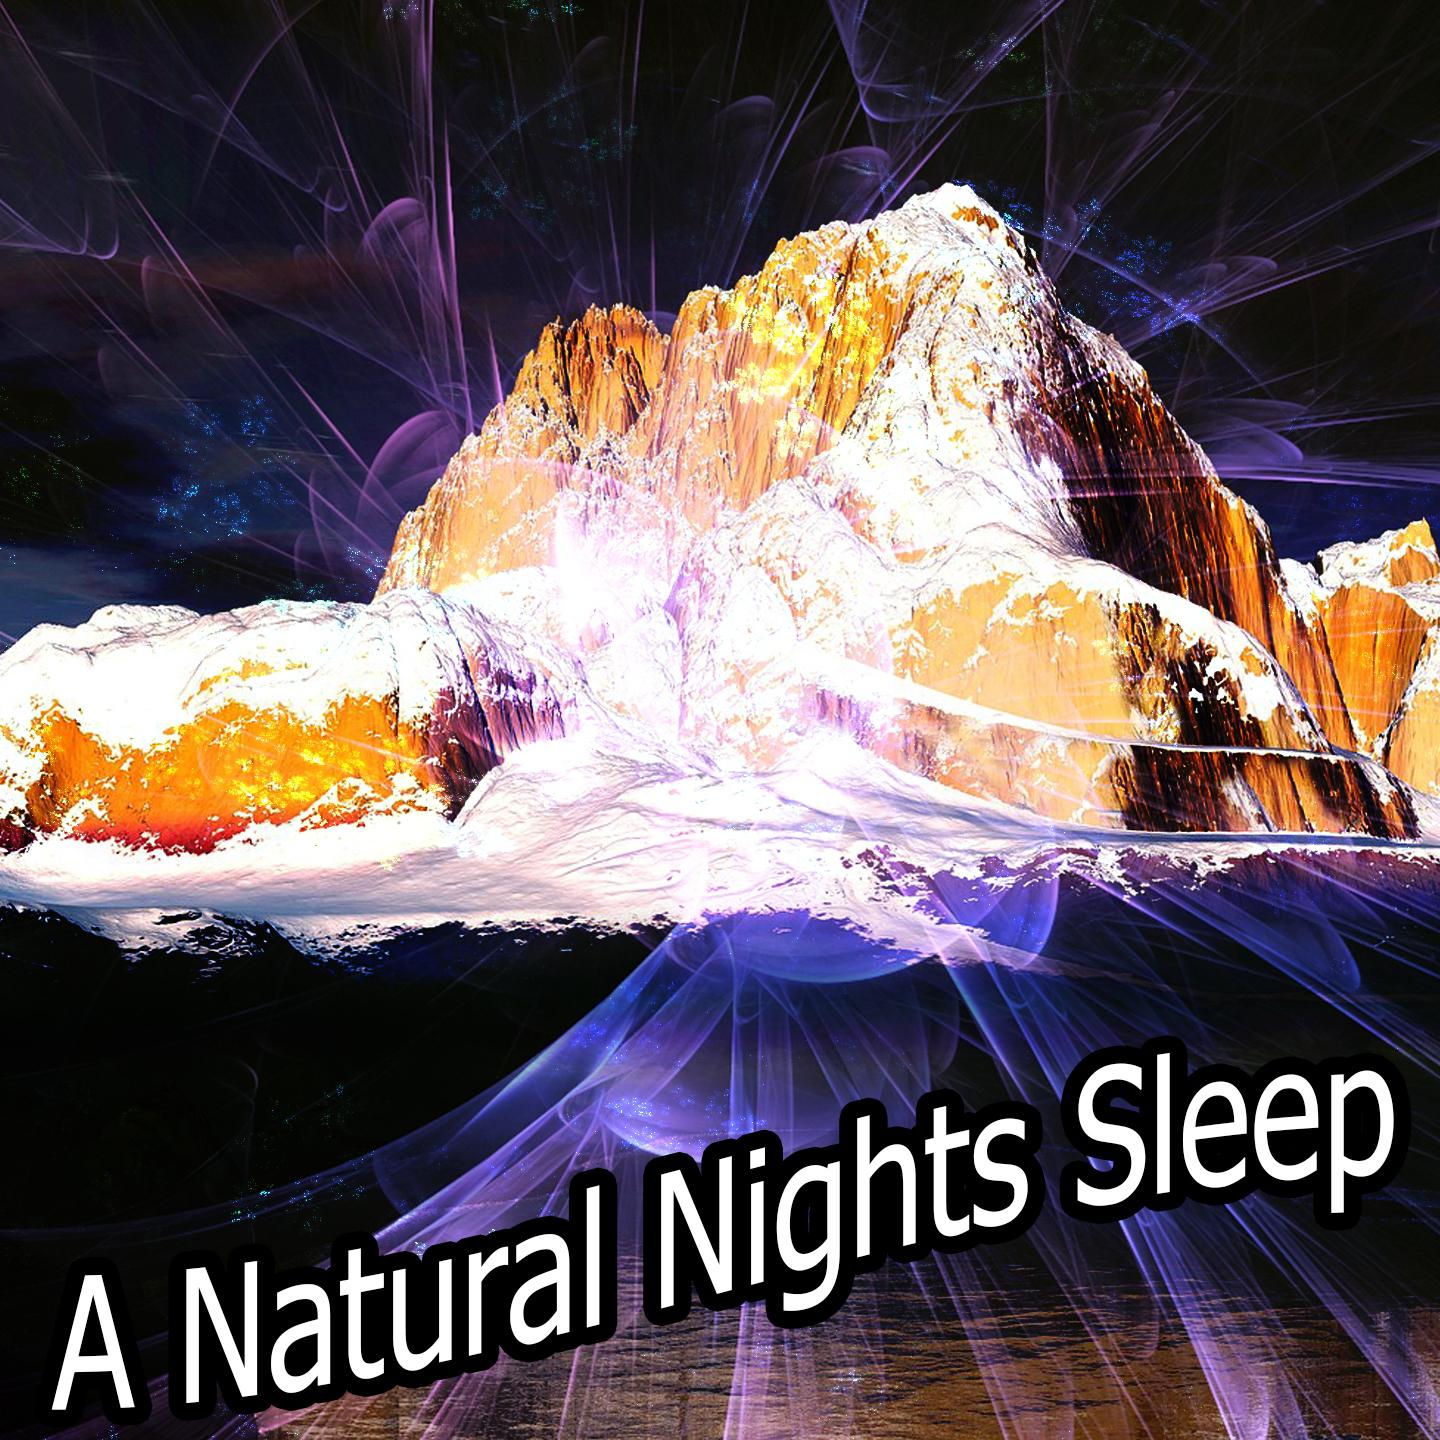 A Natural Nights Sleep